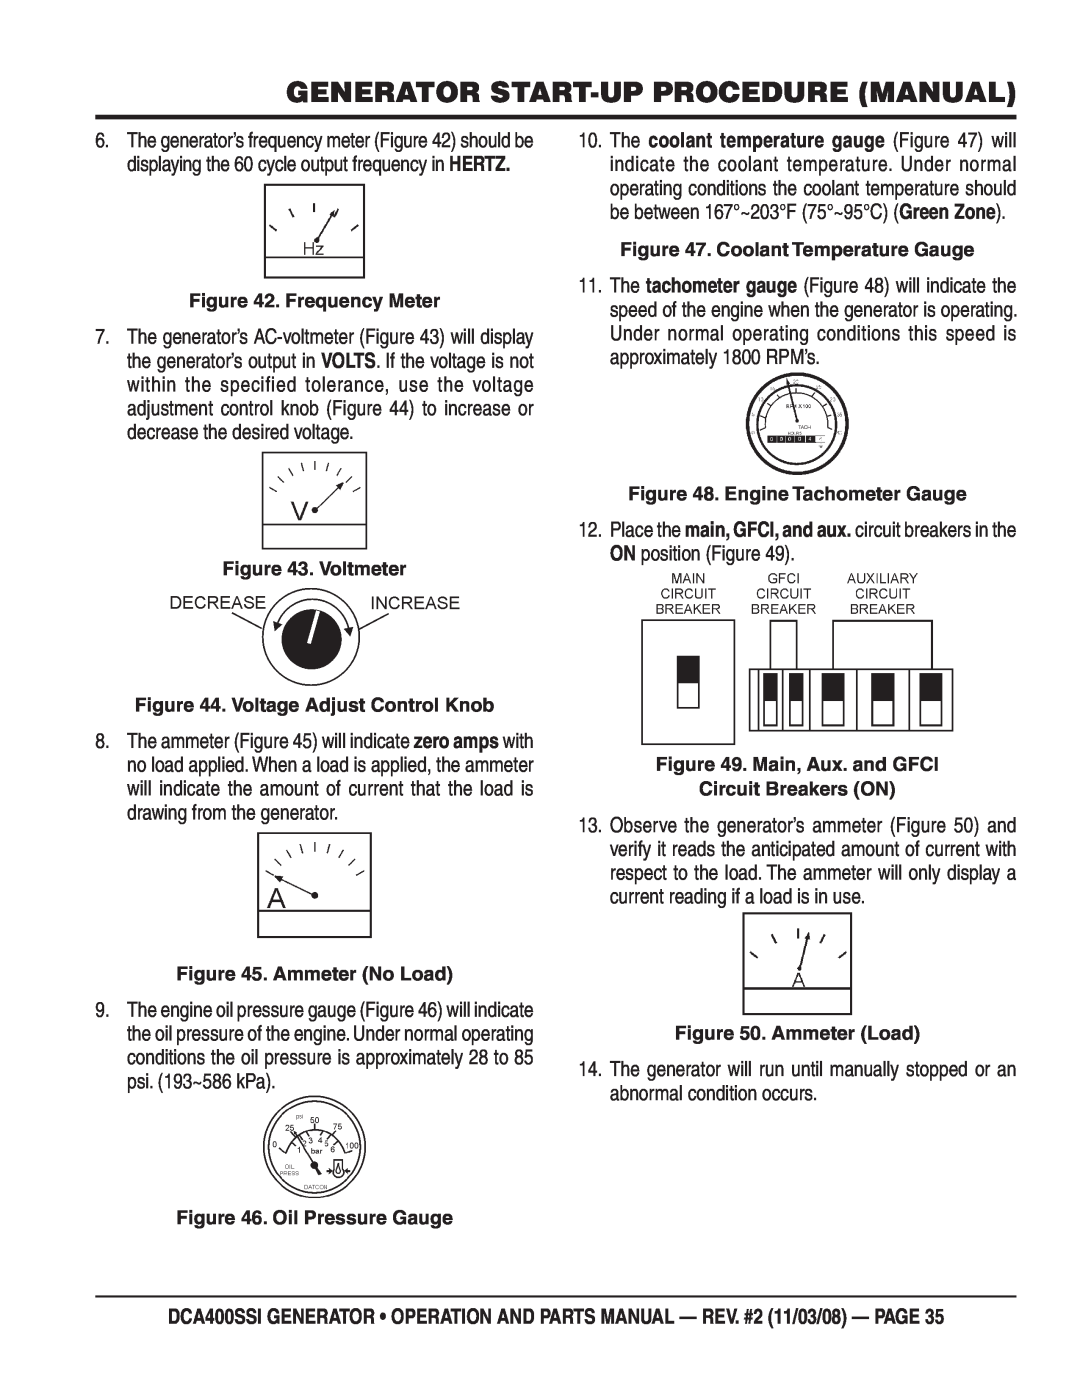 Multiquip DCA400SSI manual Generator Start-Upprocedure Manual, Frequency Meter 